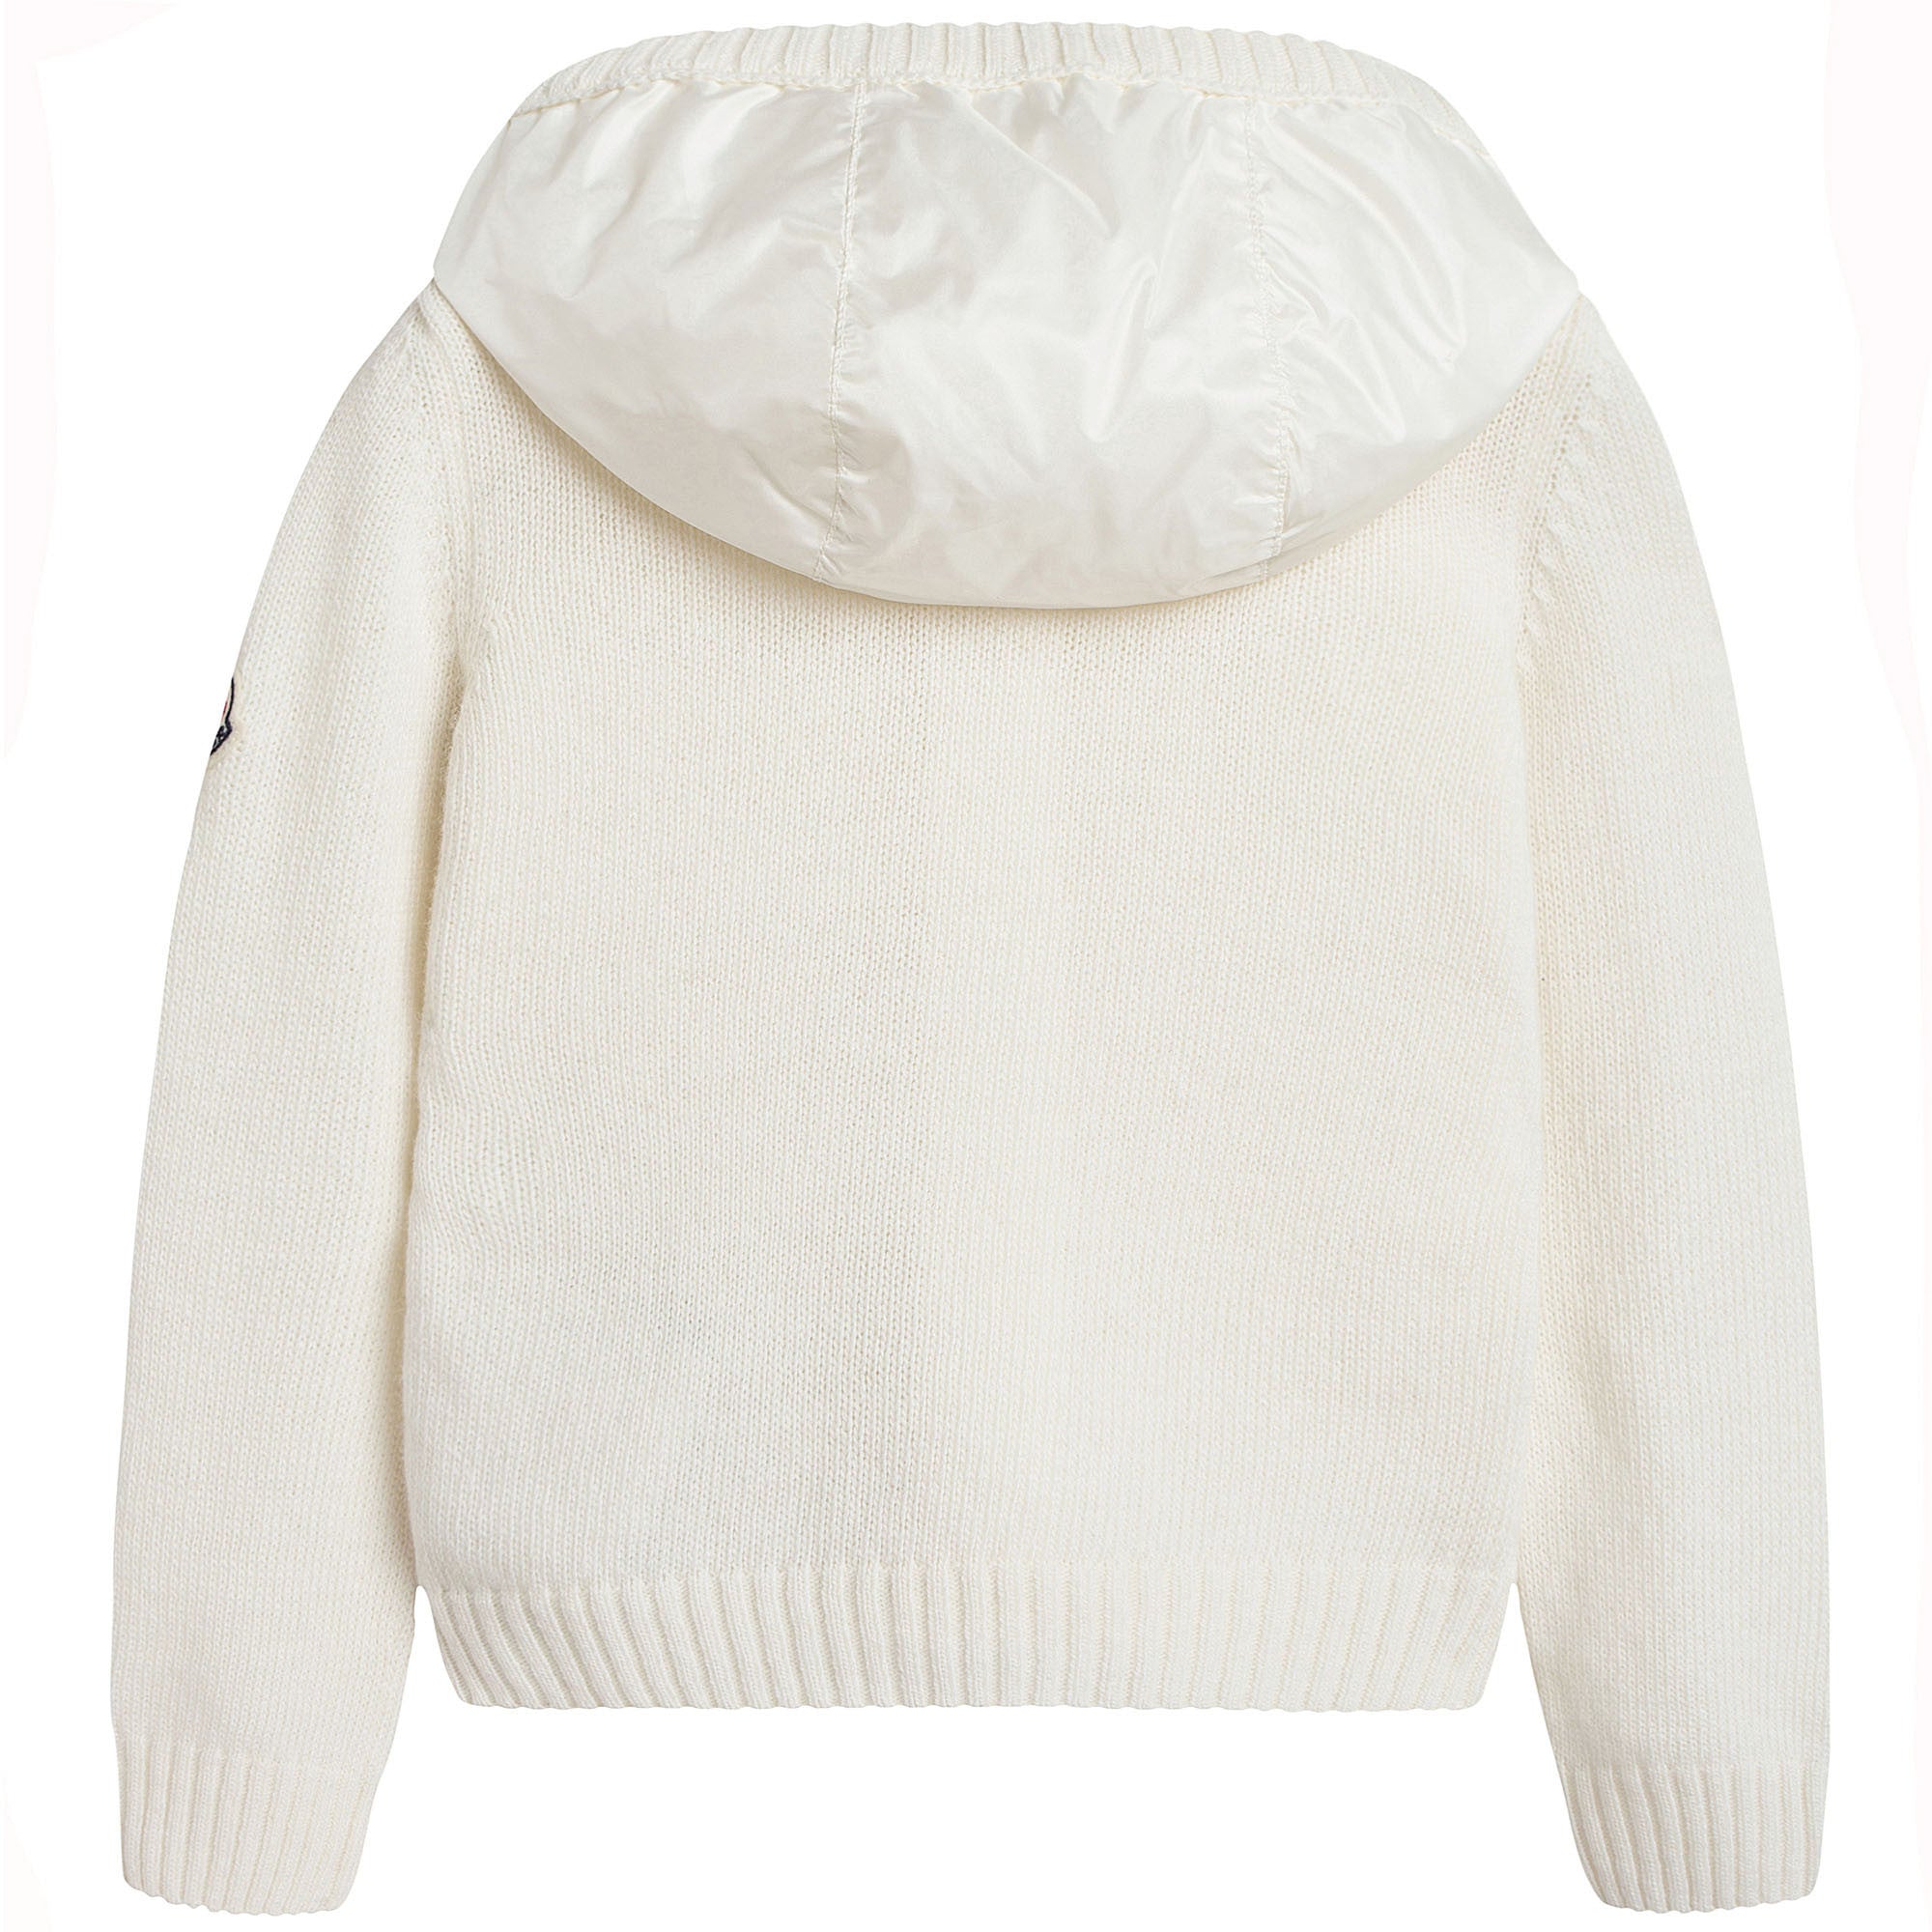 Girls White Knitted Hooded Cardigan - CÉMAROSE | Children's Fashion Store - 2